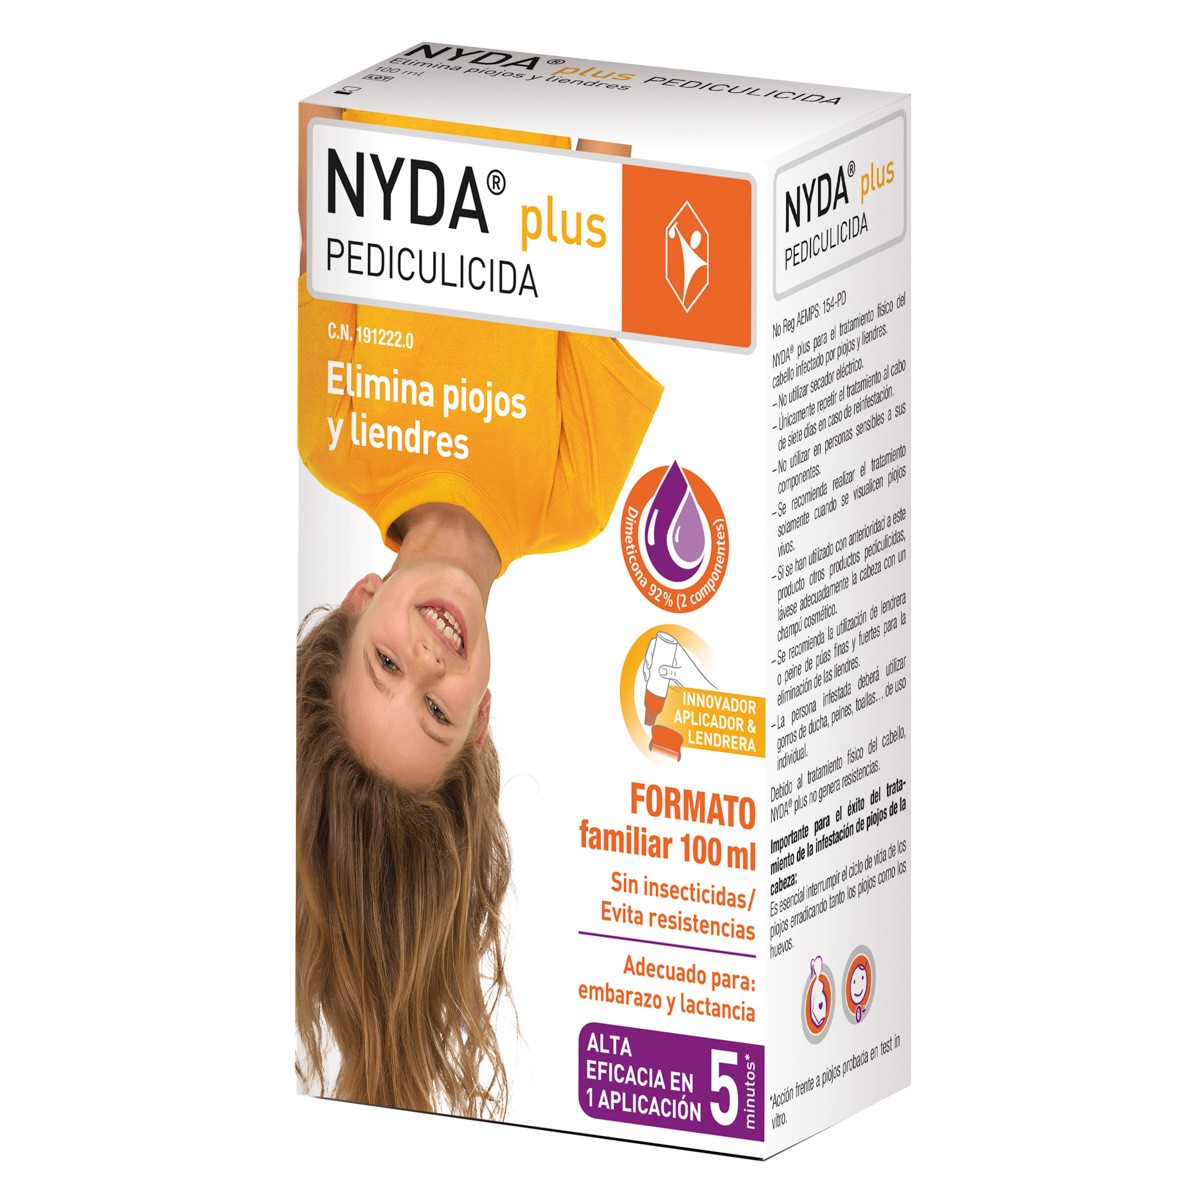 Nyda Plus pediculicida 100ml